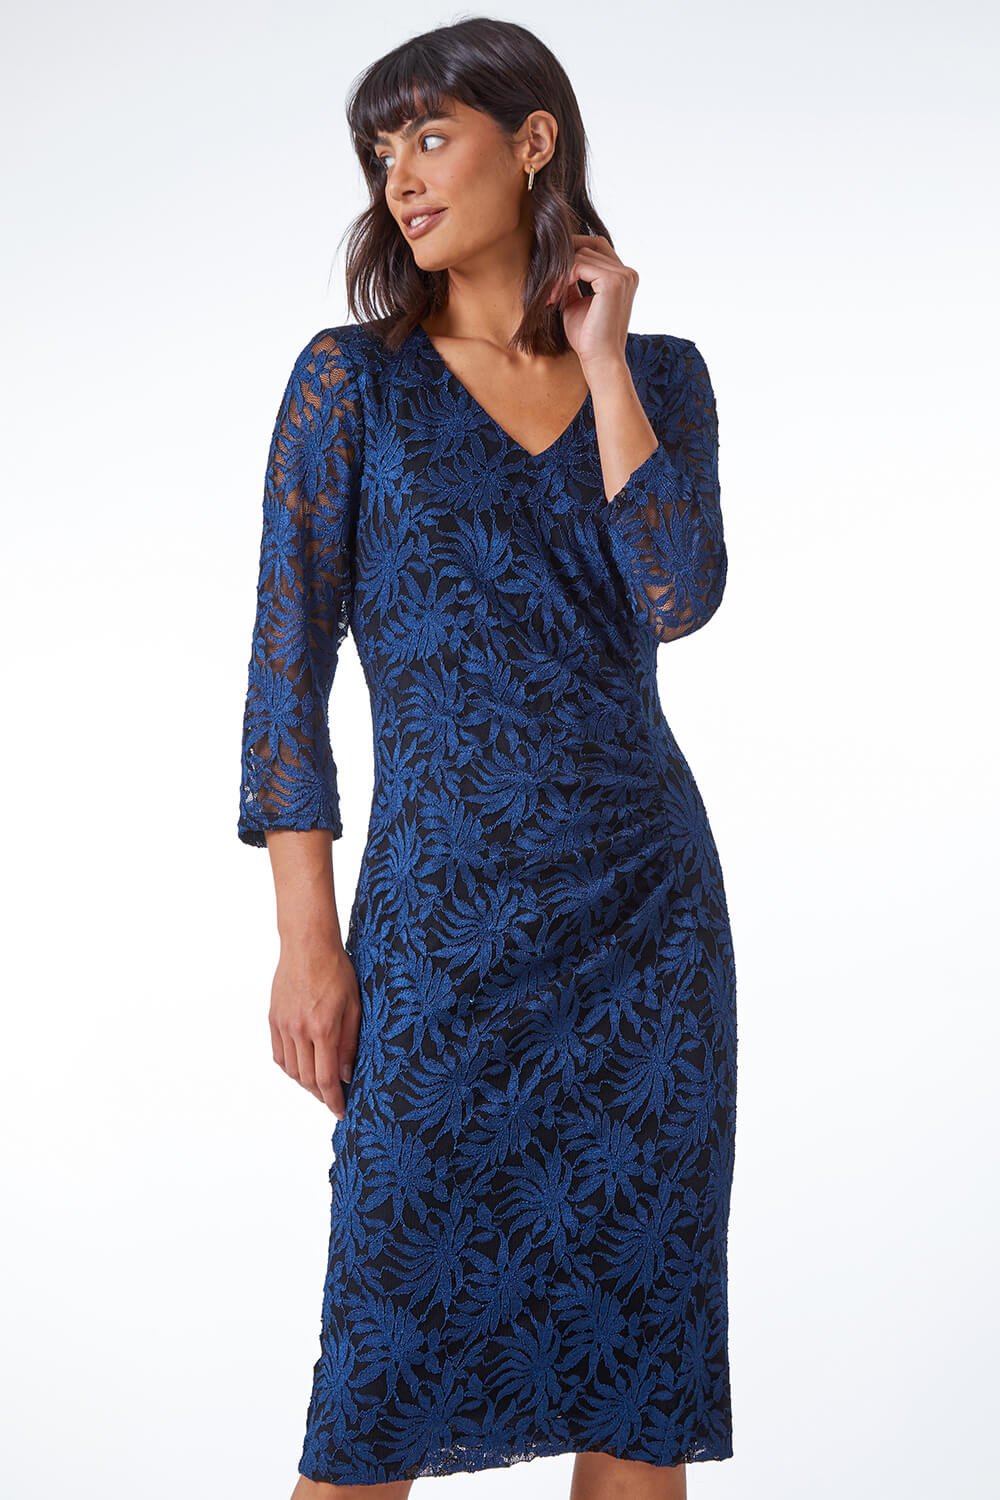 Palm Print Ruched Lace Dress in Petrol Blue - Roman Originals UK